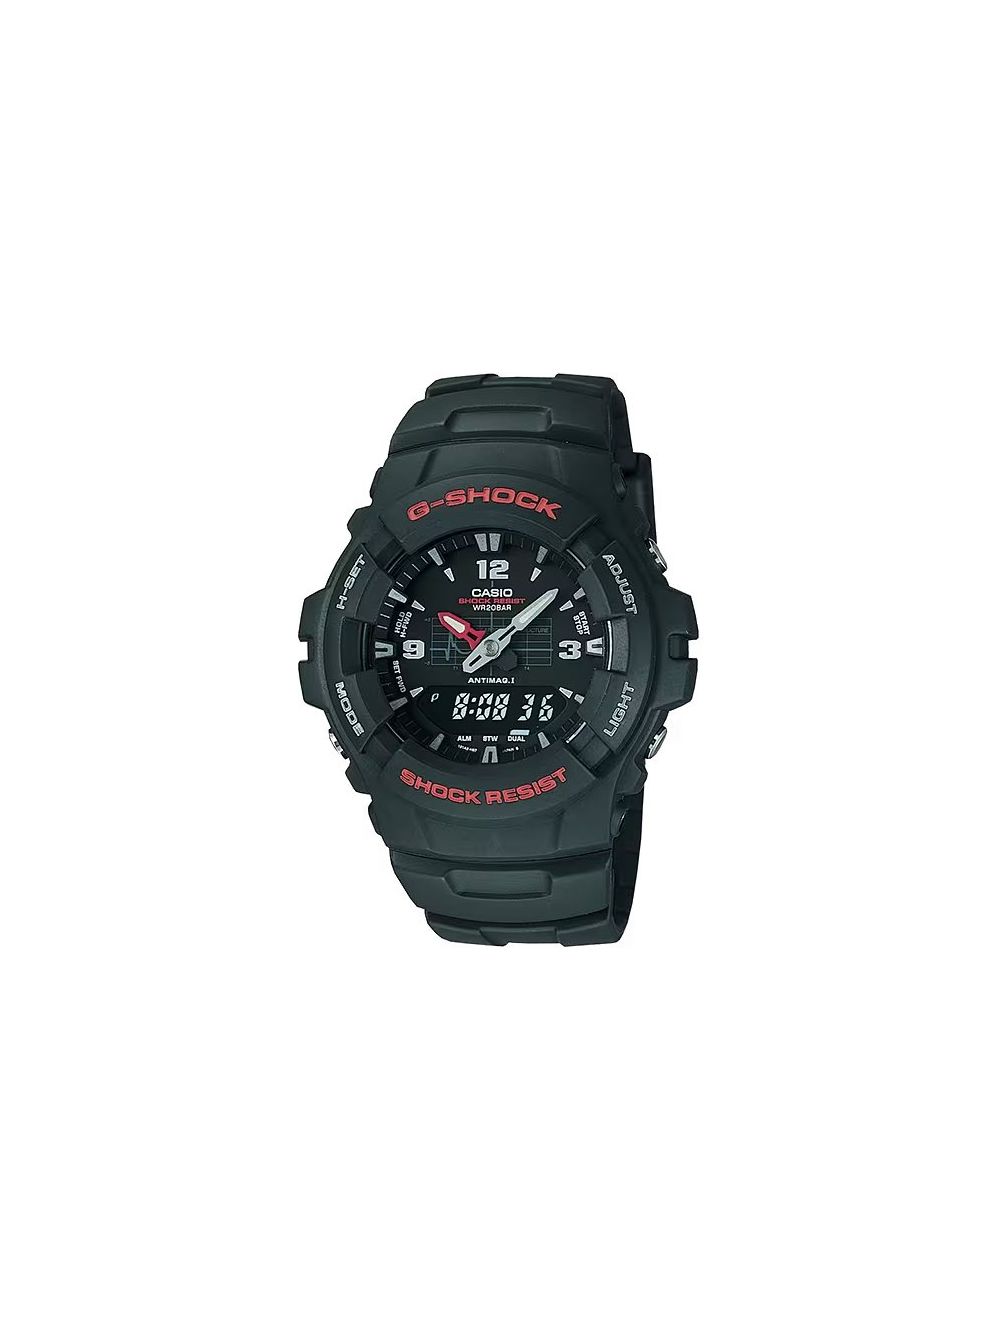 Casio G-Shock Classic Analog-Digital Watch - Clothing & Accessories